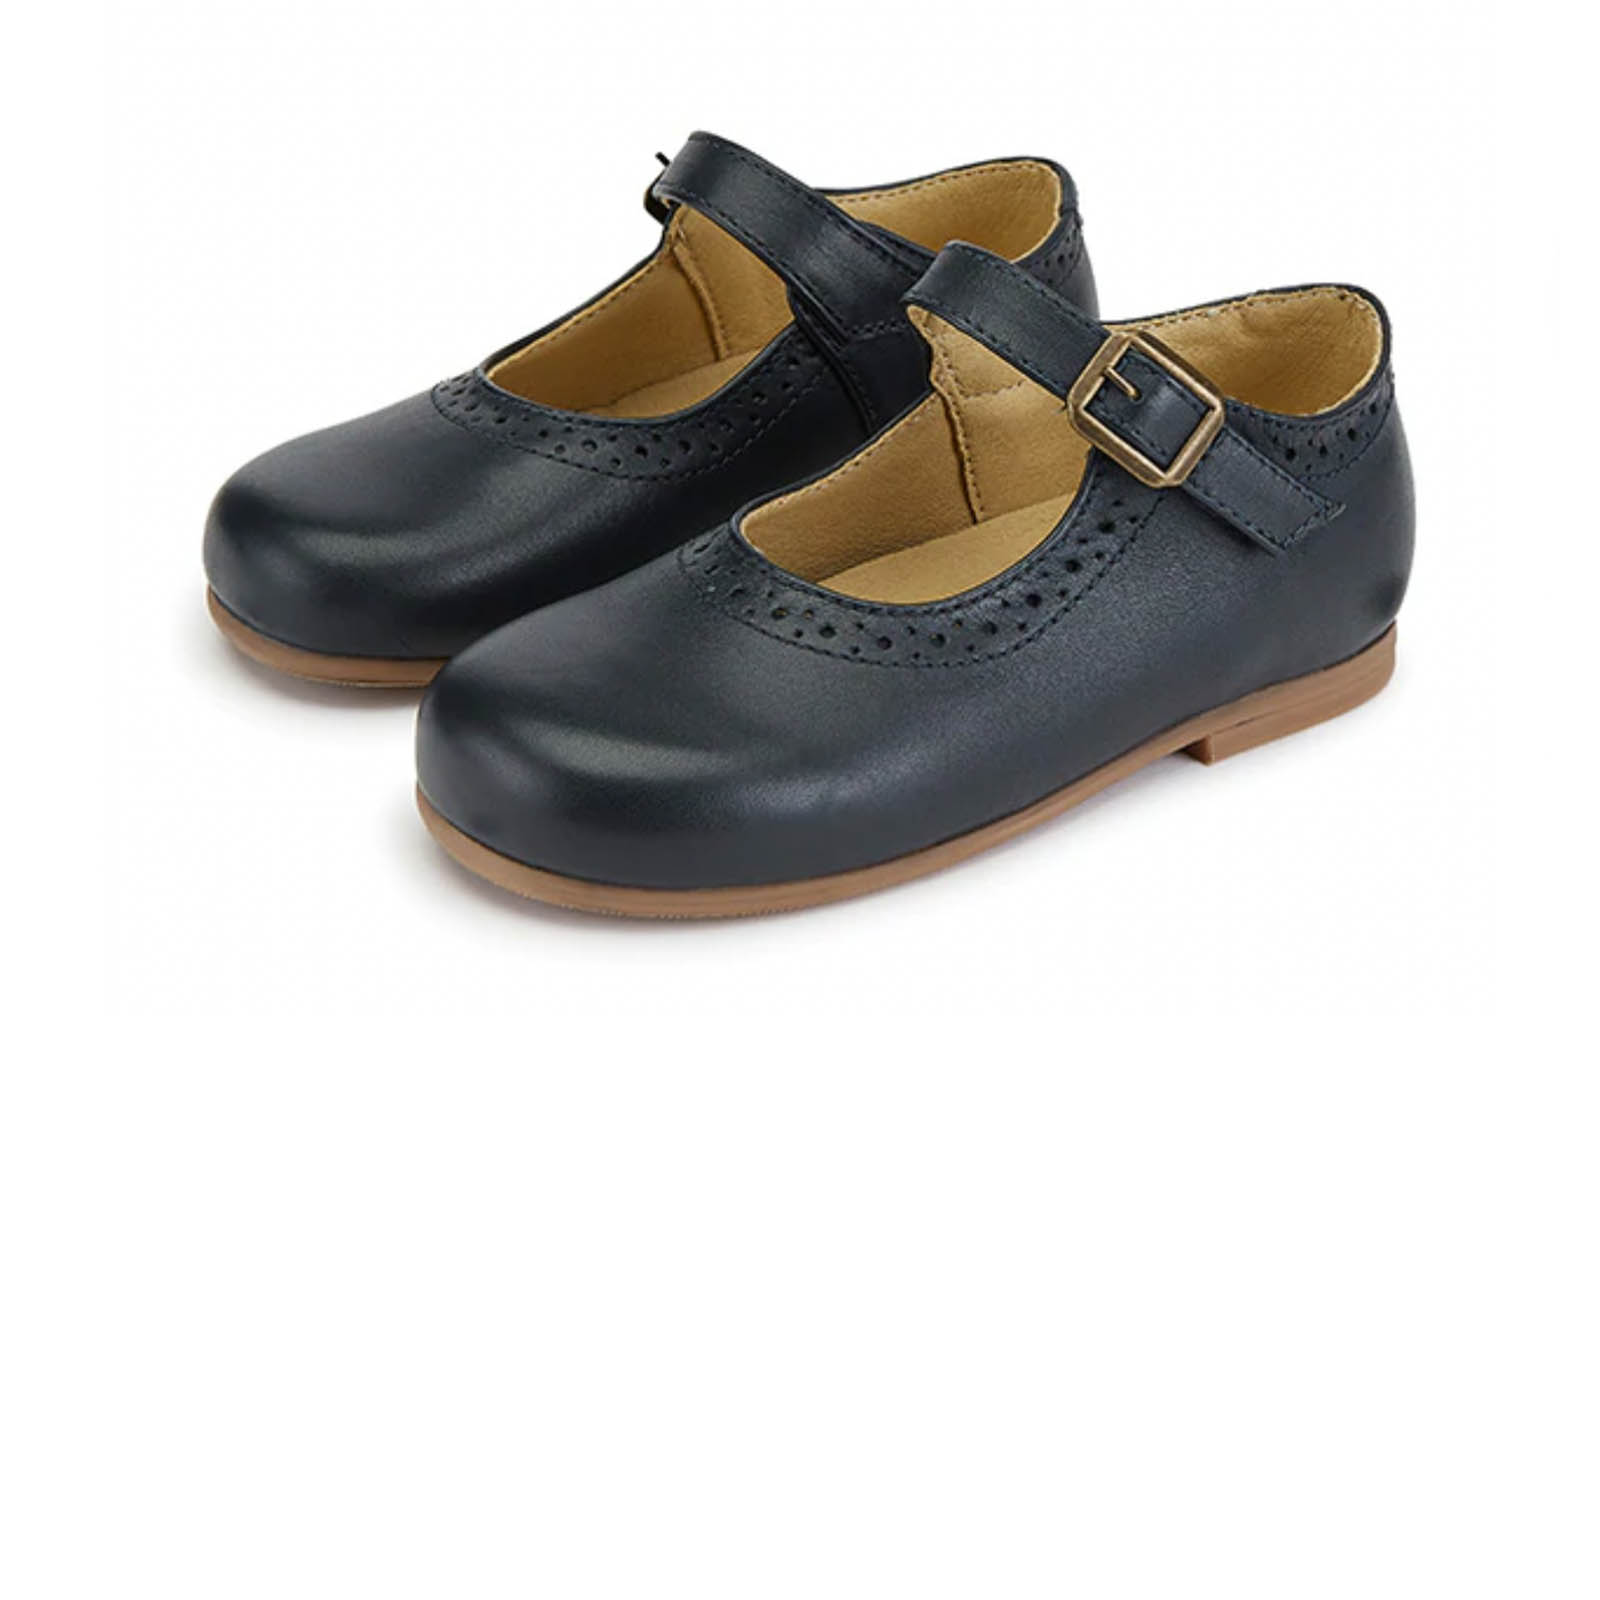 Diana velcro mary jane shoe navy leather junior